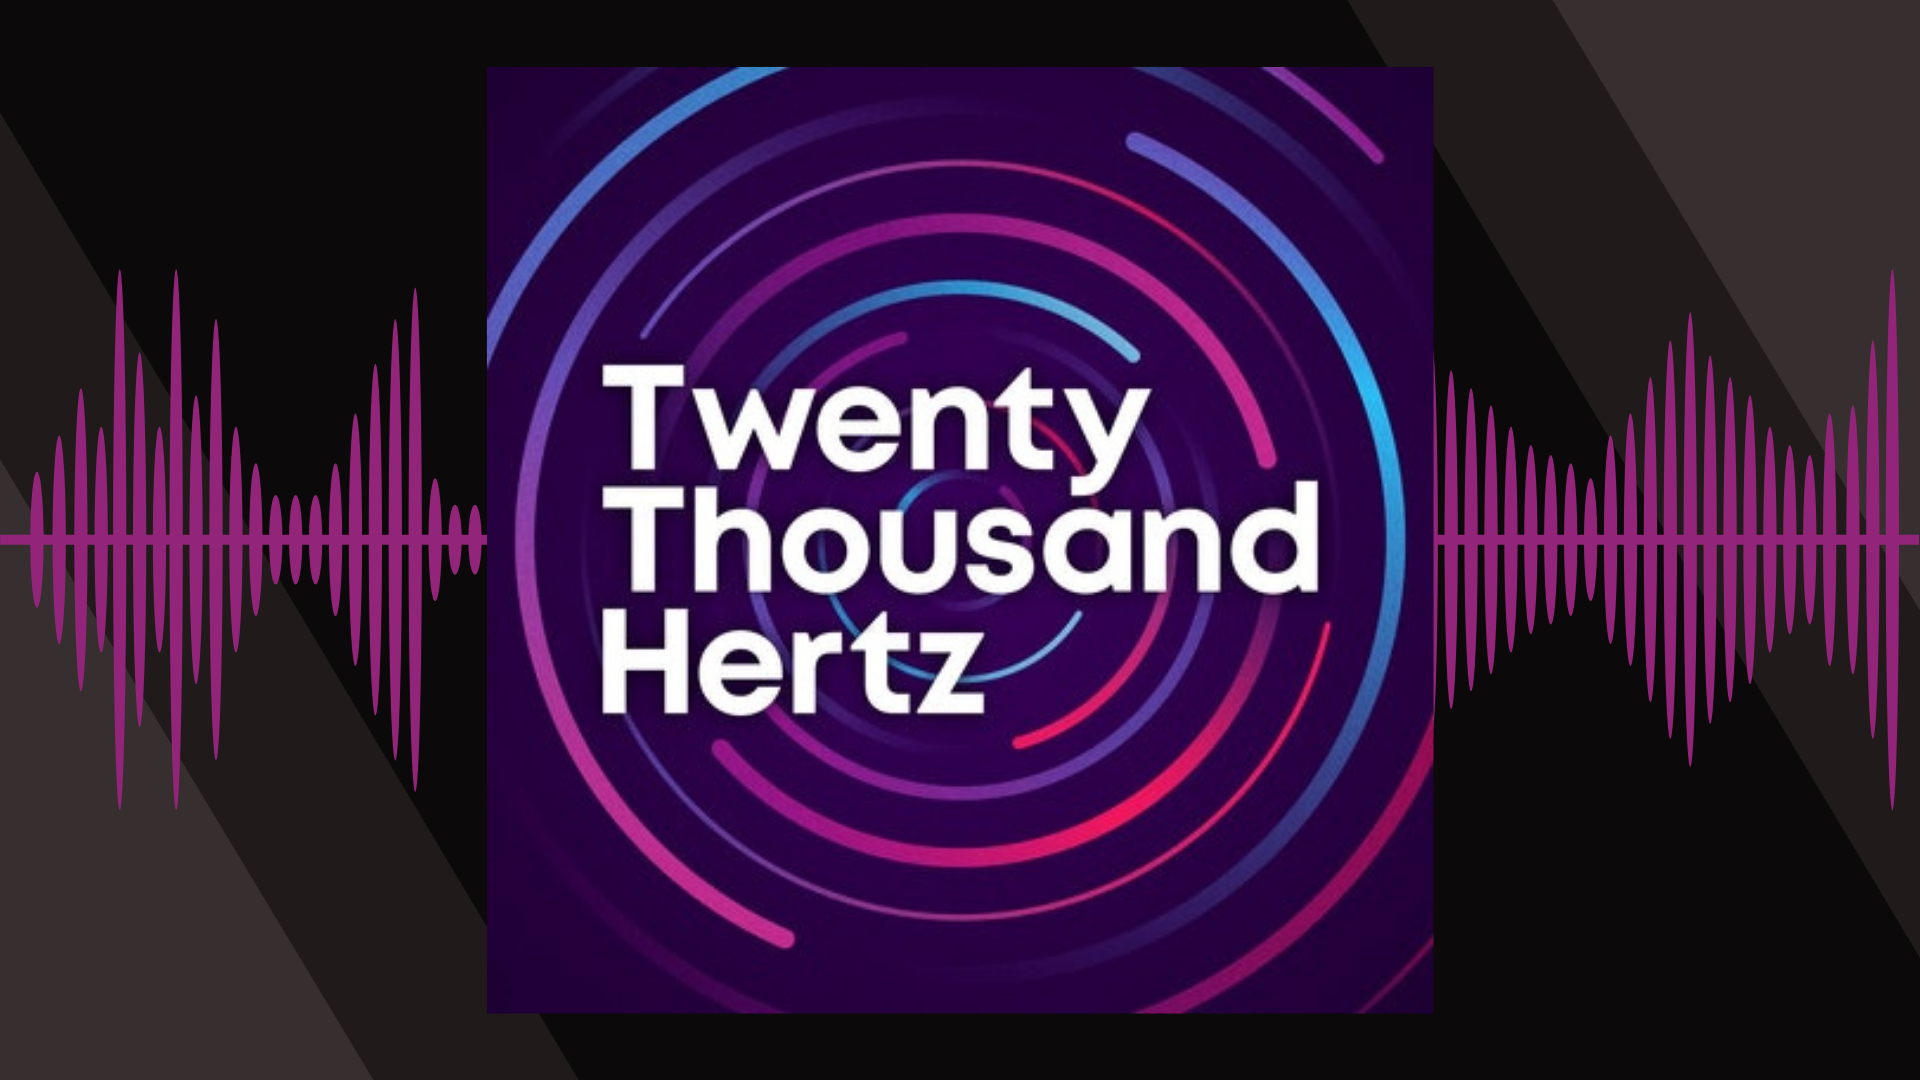 Twenty Thousand Hertz sound design podcast